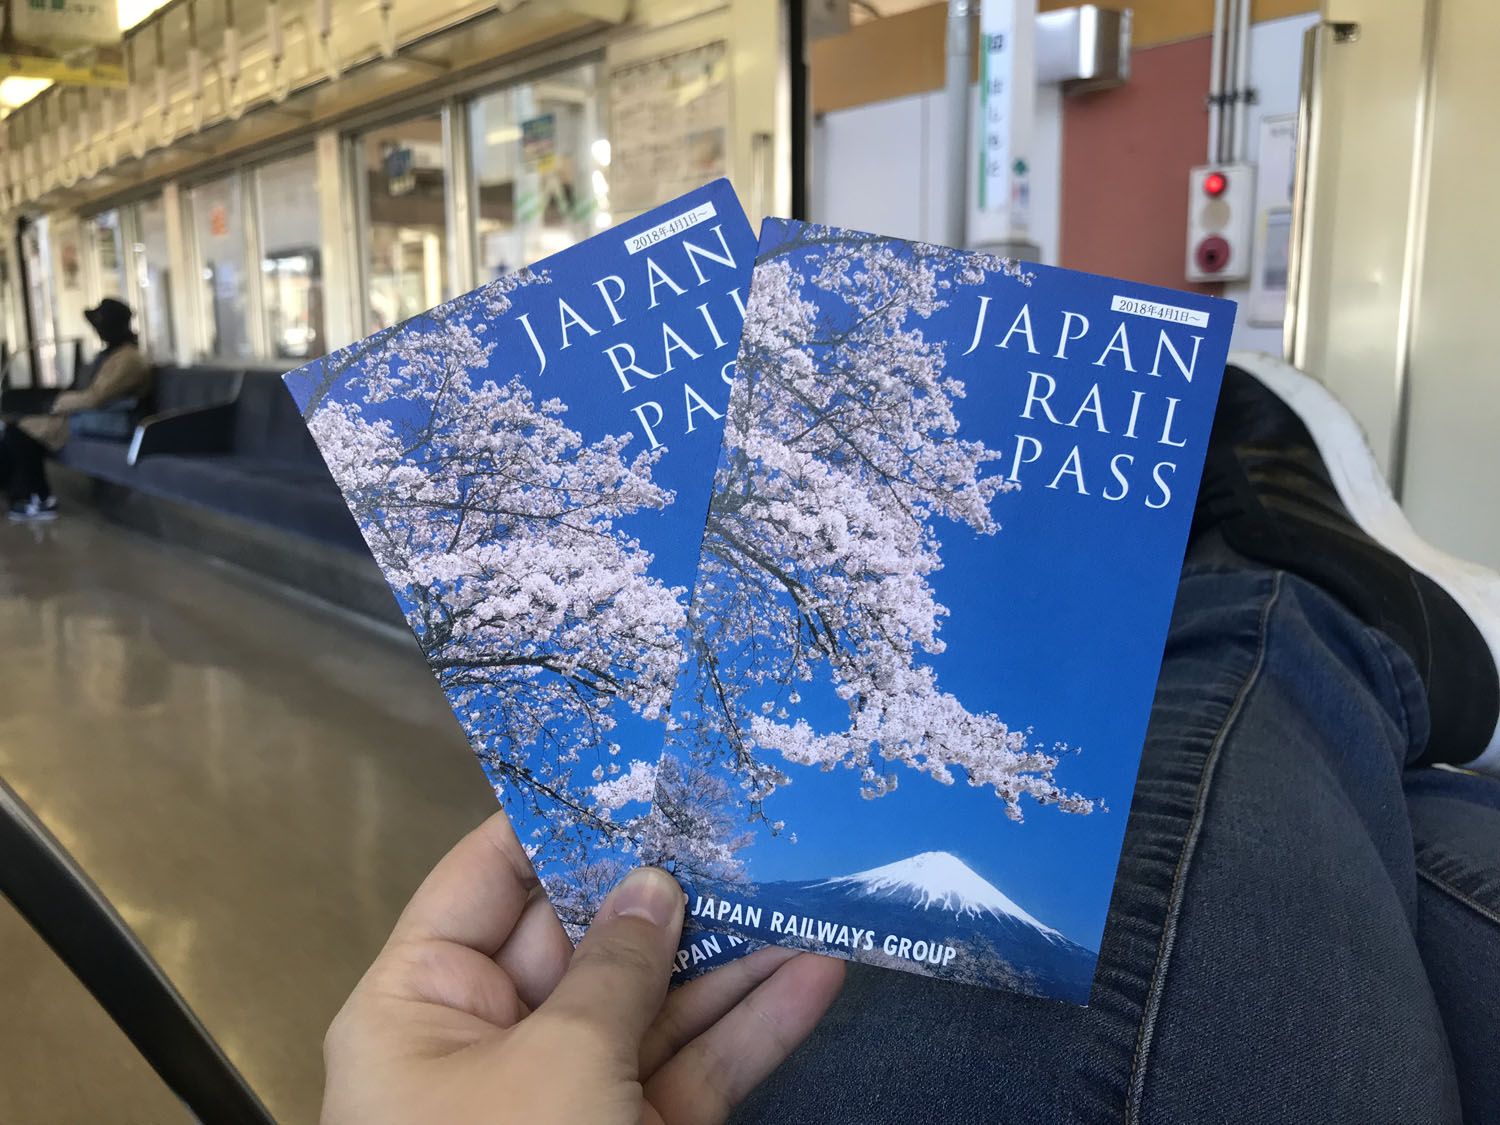 nippon travel agency rail pass